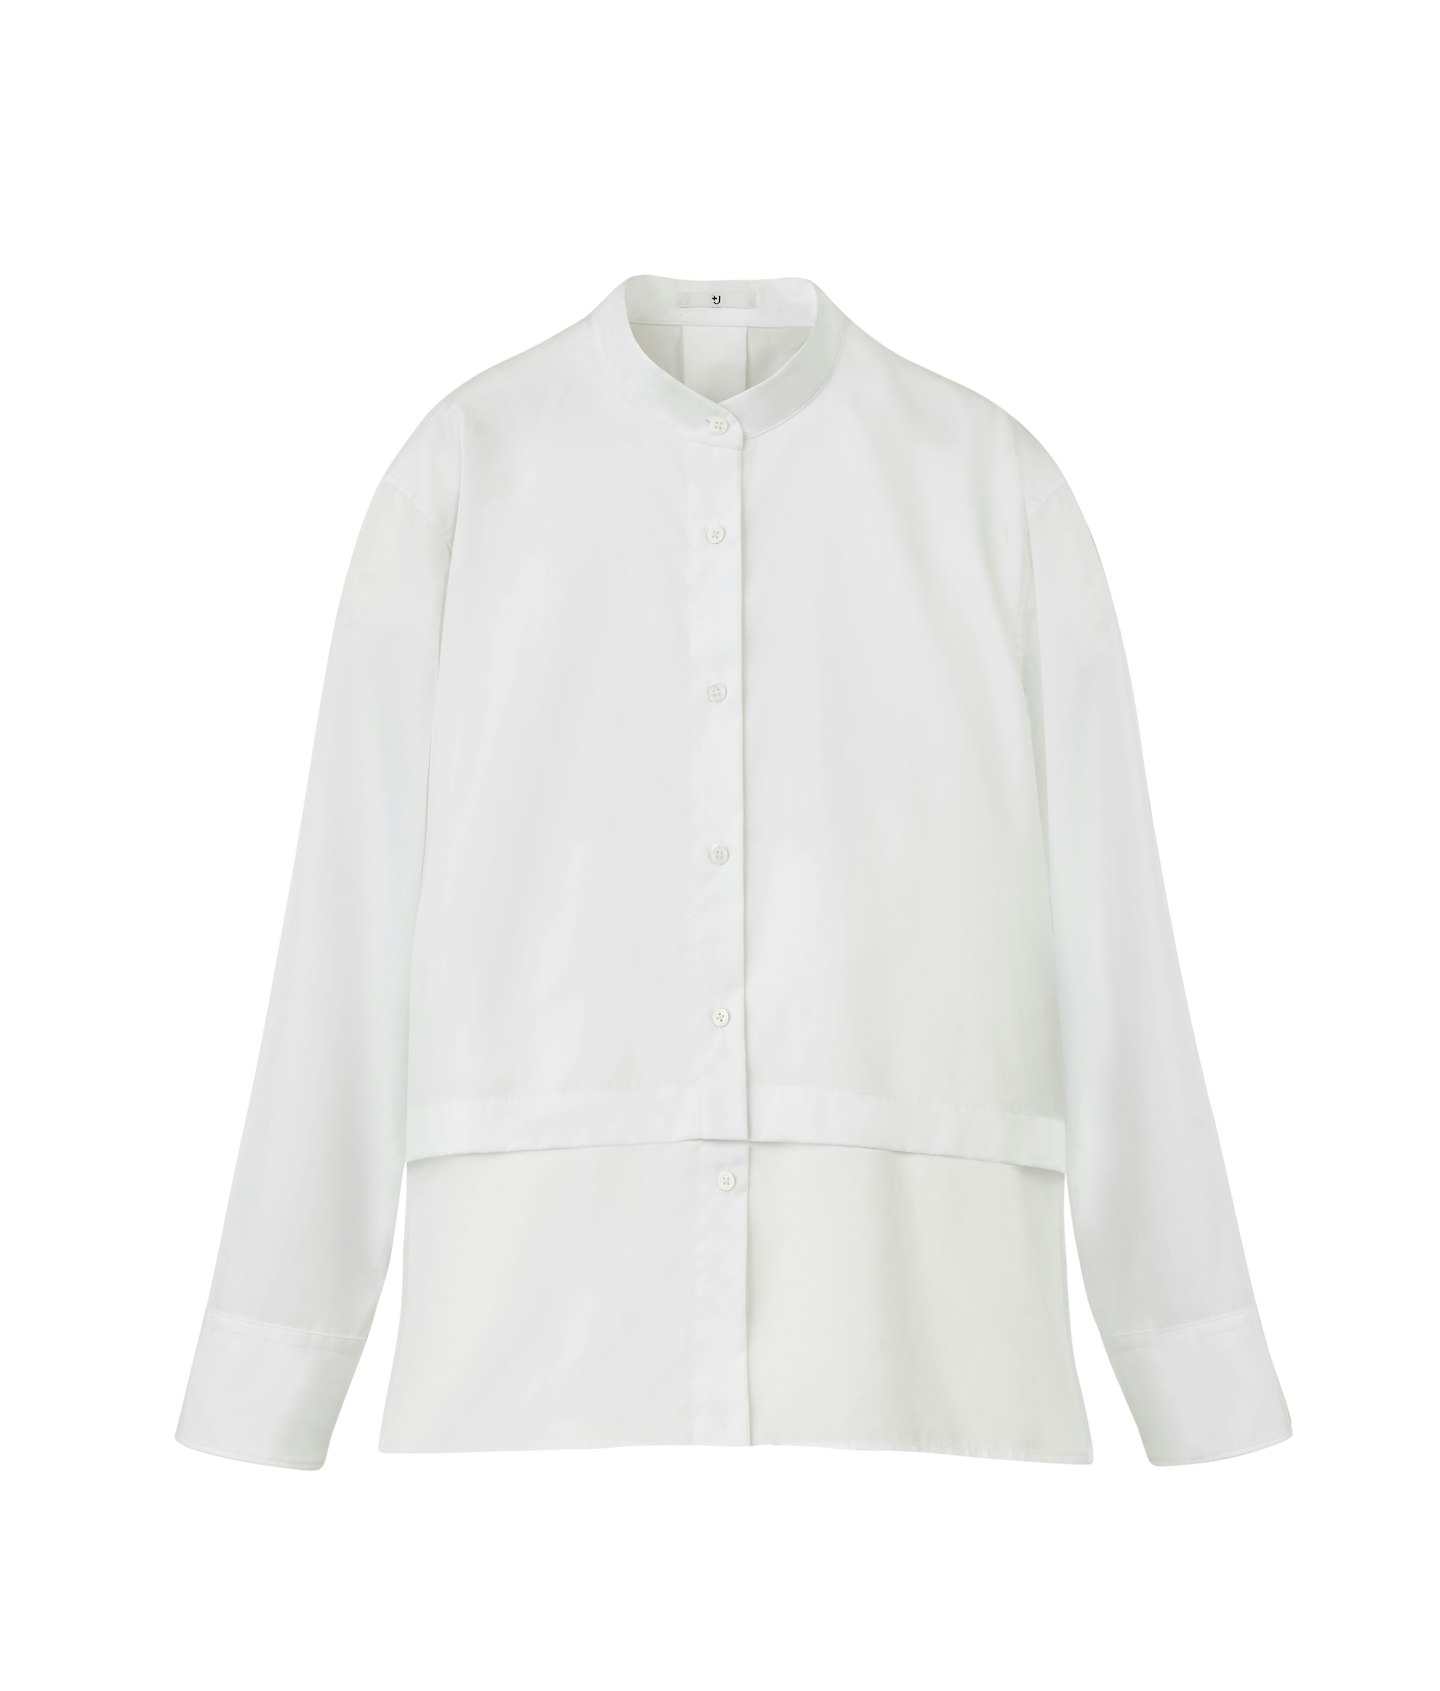 Supima Cotton Shirt Jacket, £39.90